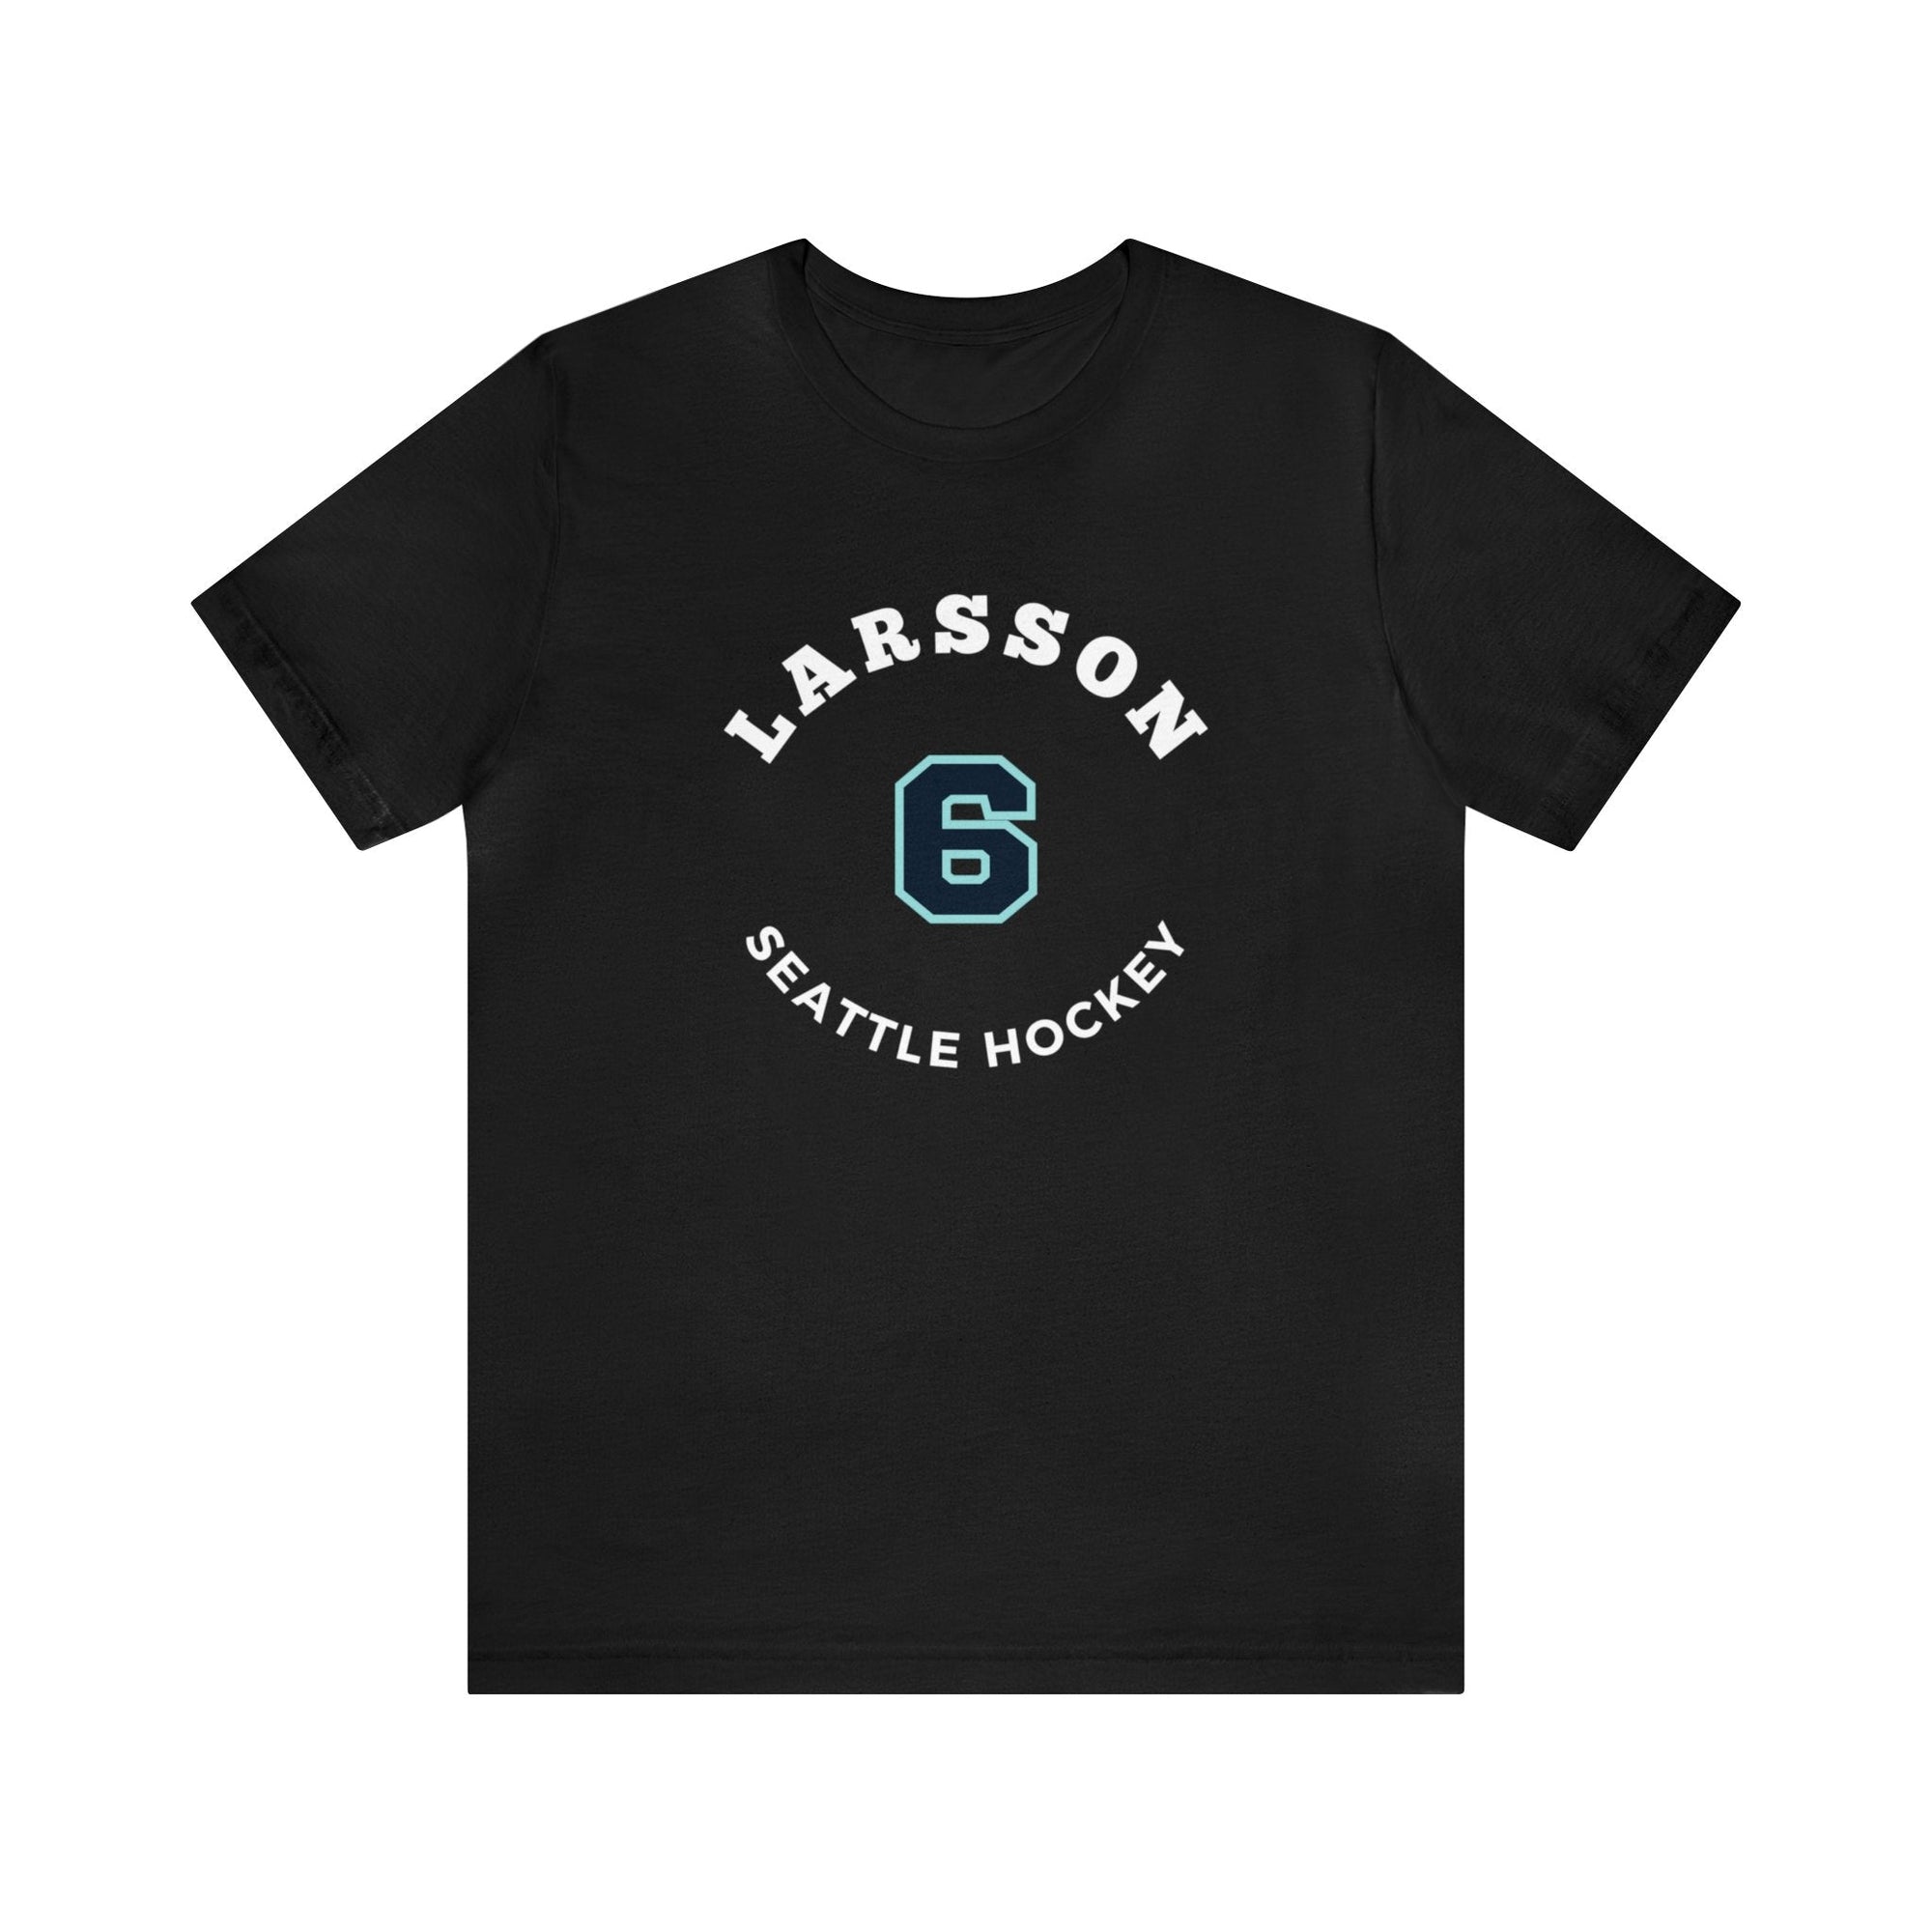 T-Shirt Larsson 6 Seattle Hockey Number Arch Design Unisex T-Shirt